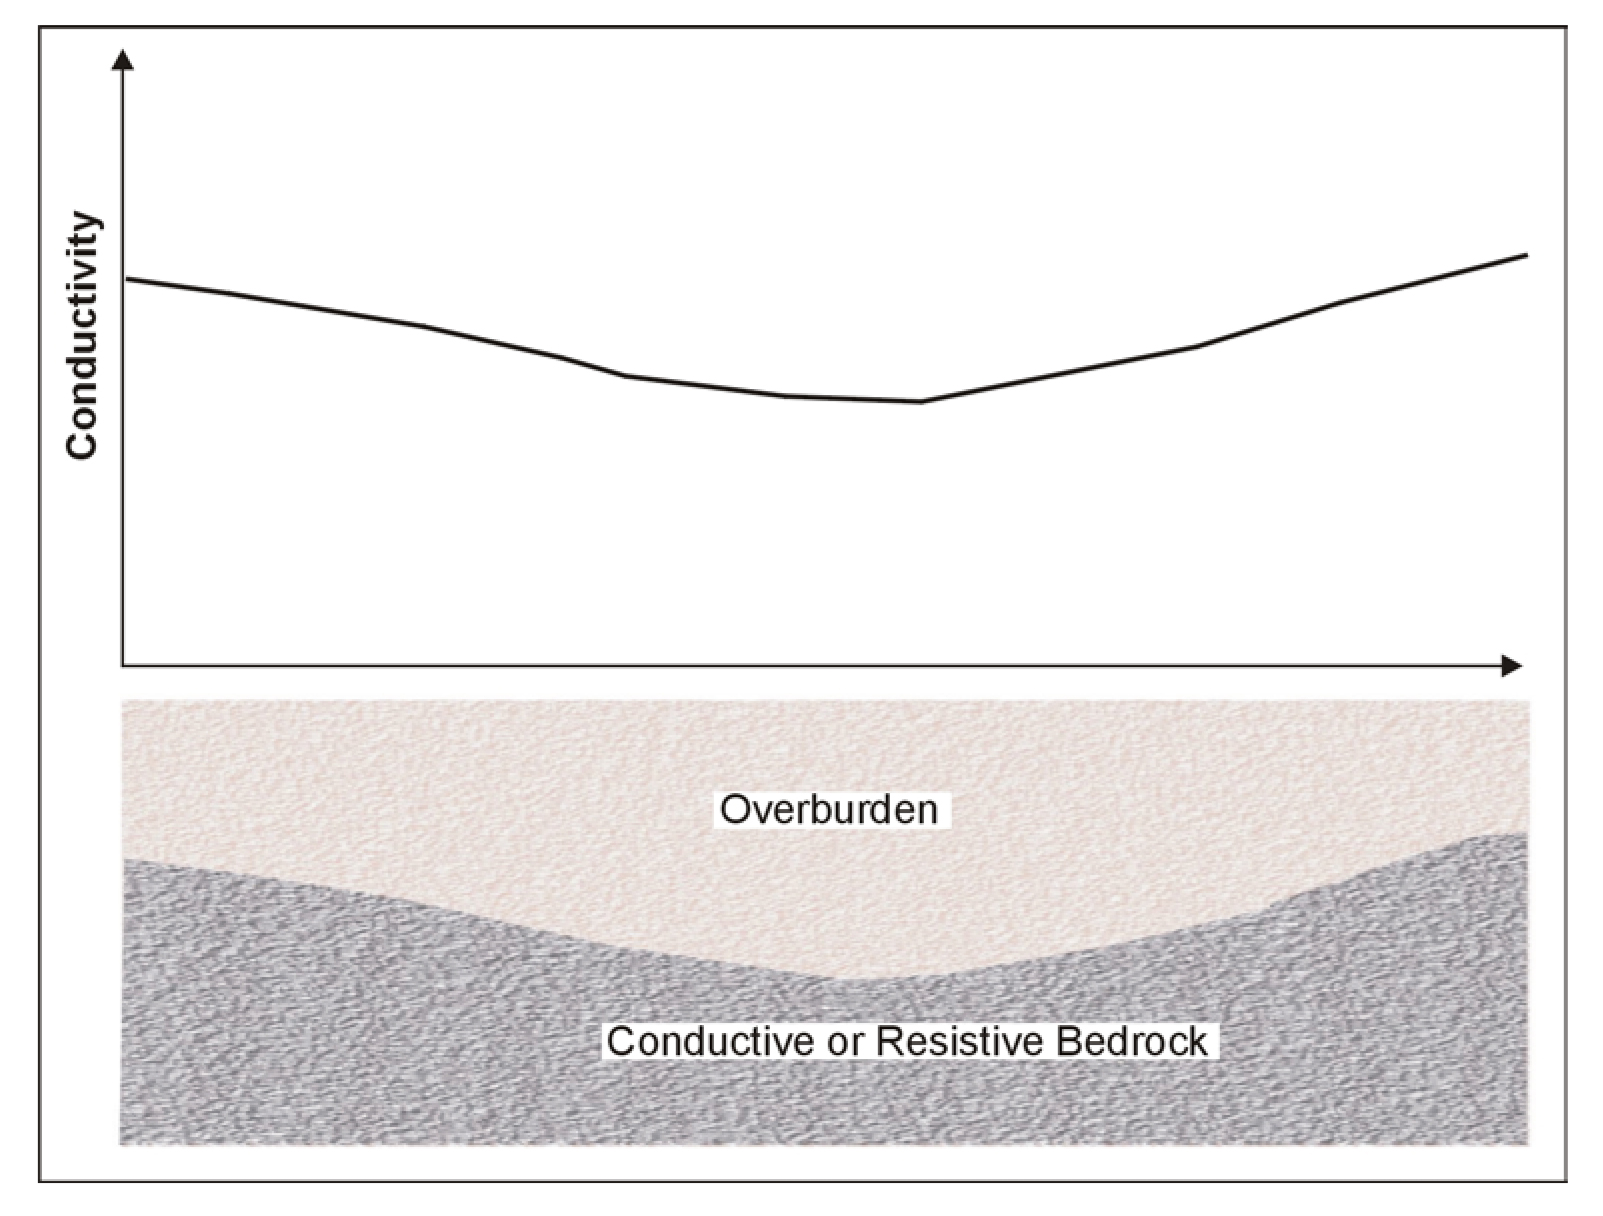 Model conductivity results over a conductive bedrock.